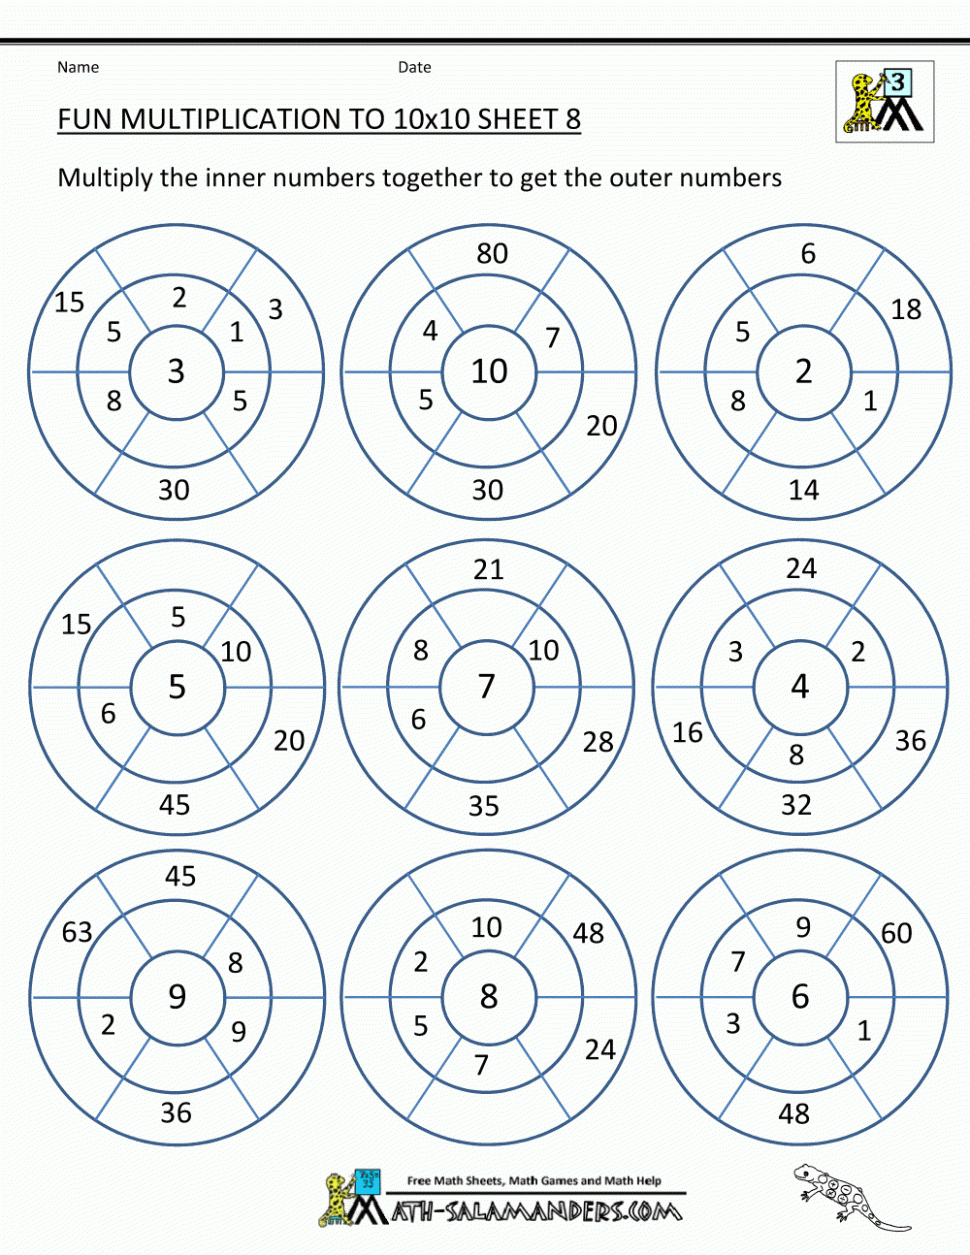  multiplication worksheets ks2 Printable Lexias Blog multiplication worksheets ks2 Year 4 